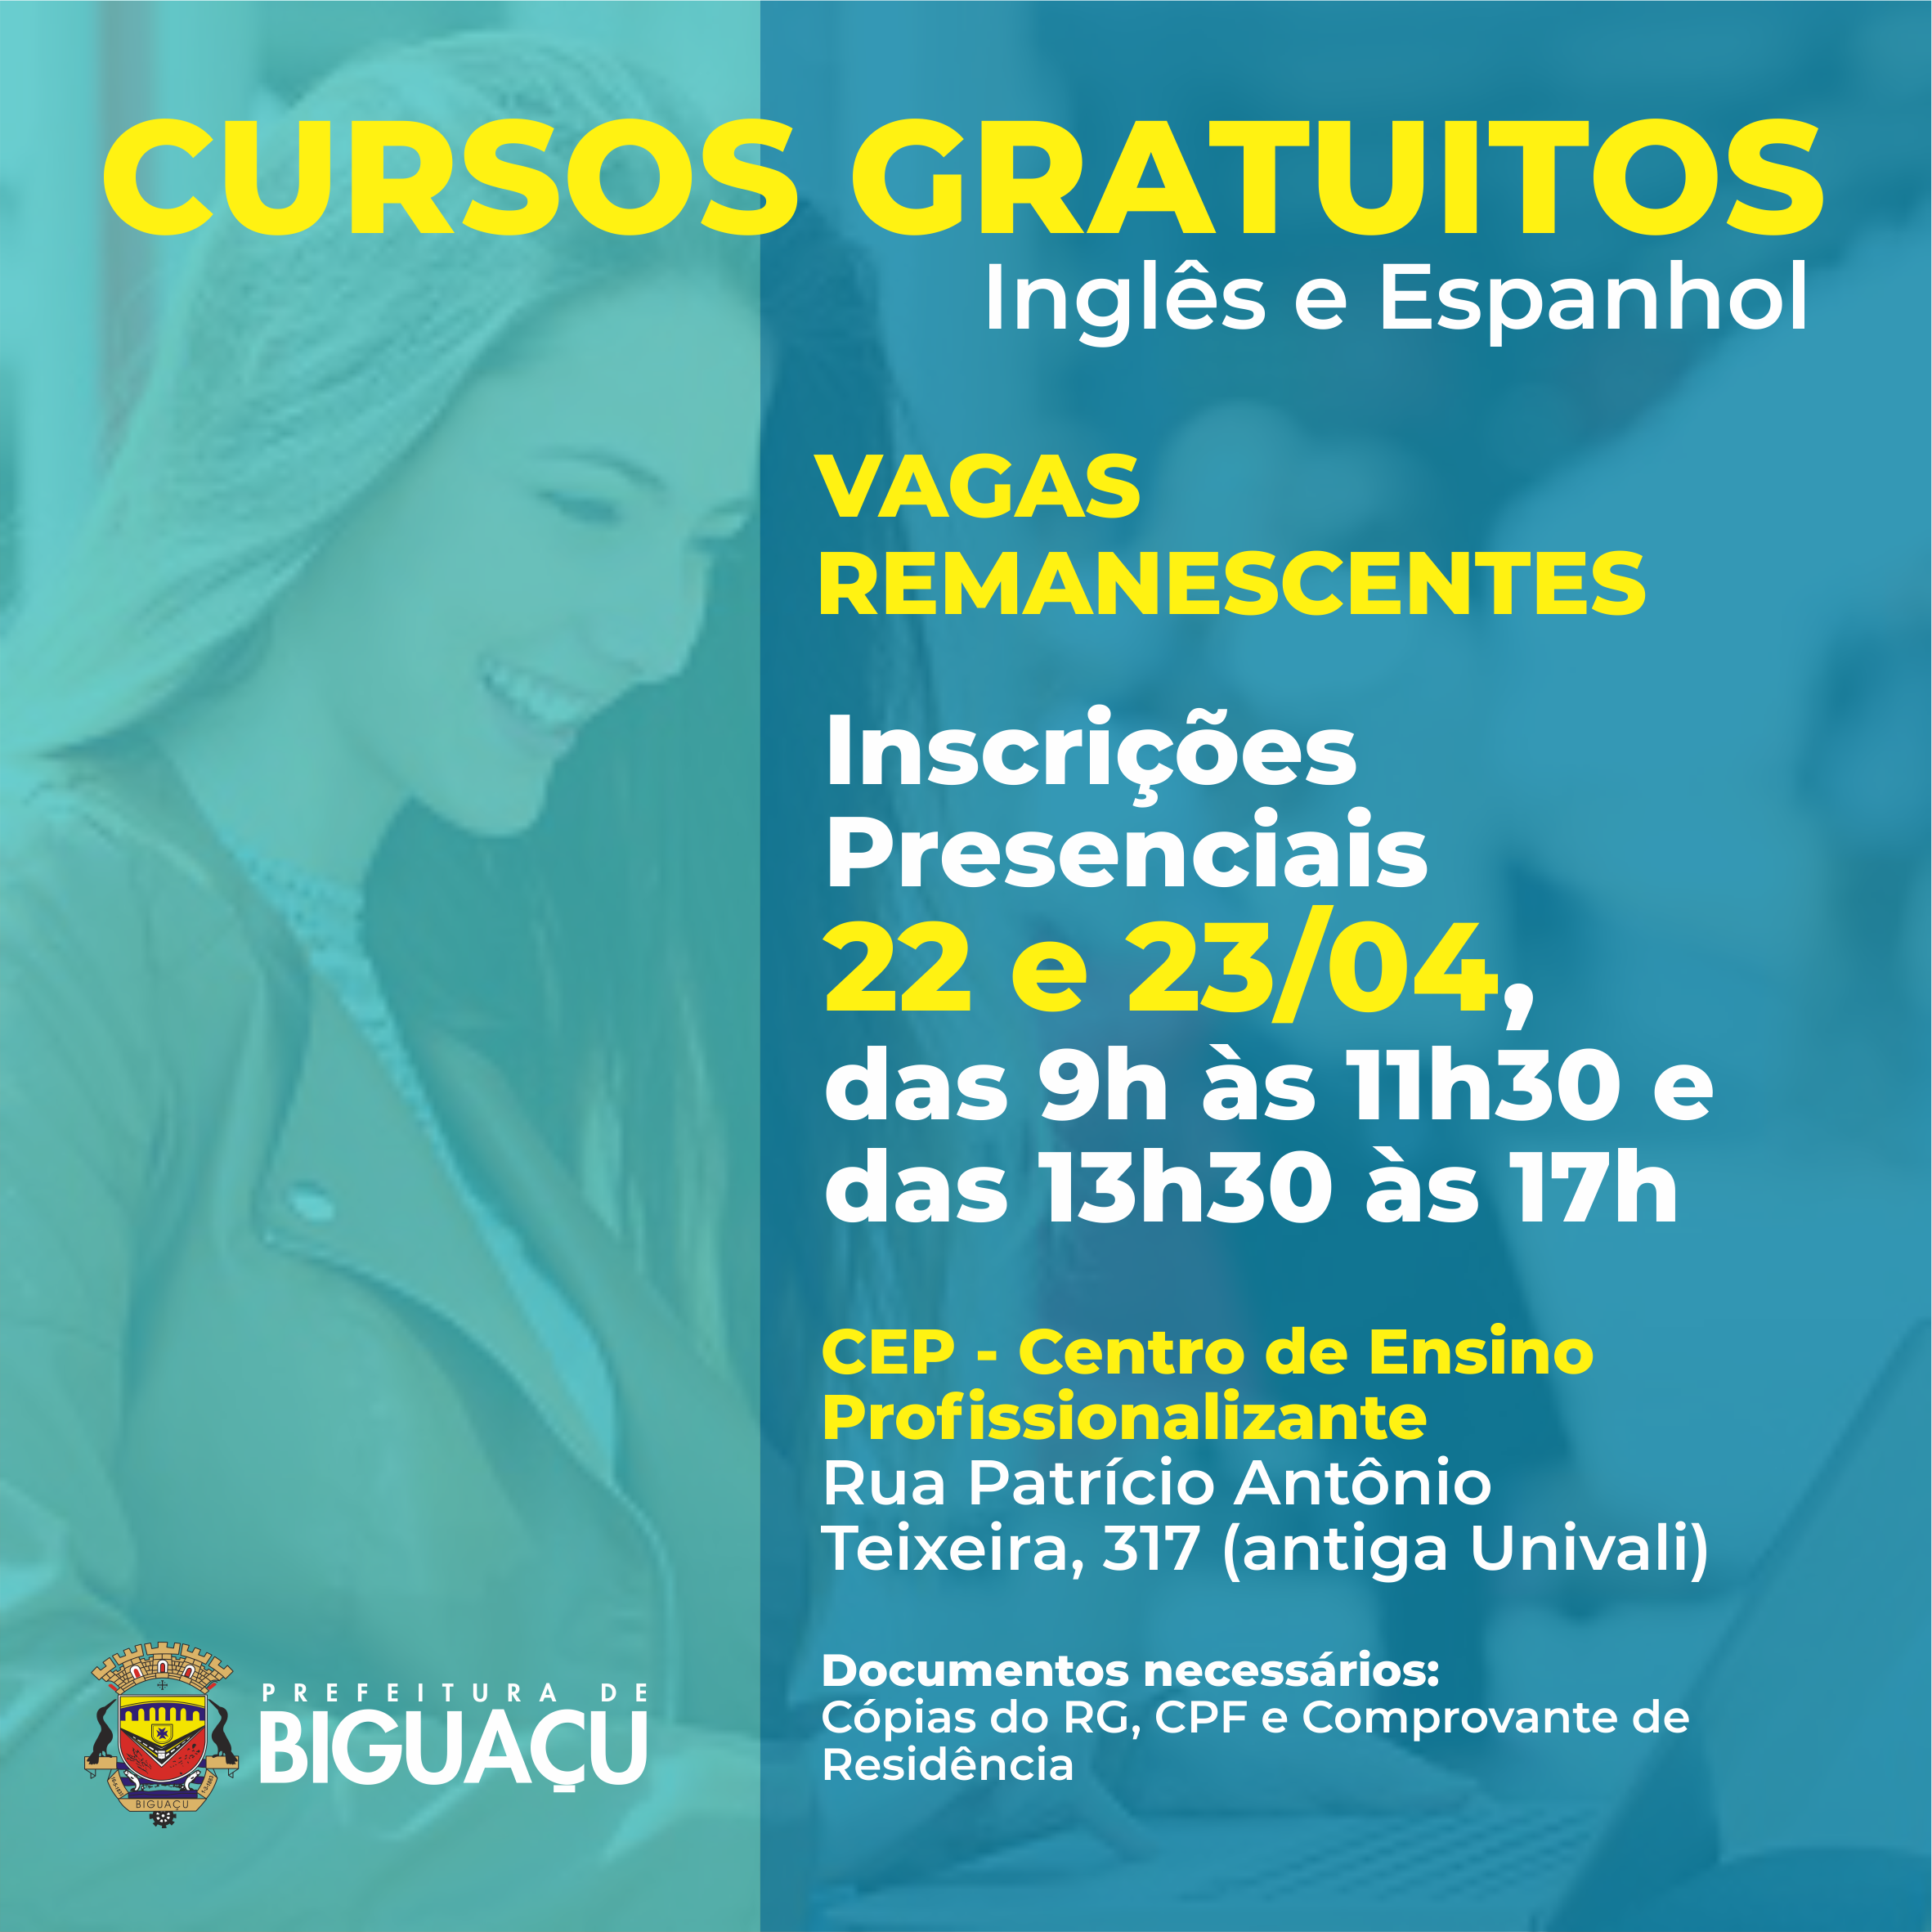 You are currently viewing Vagas remanescentes no Centro de Ensino Profissionalizante de Biguaçu